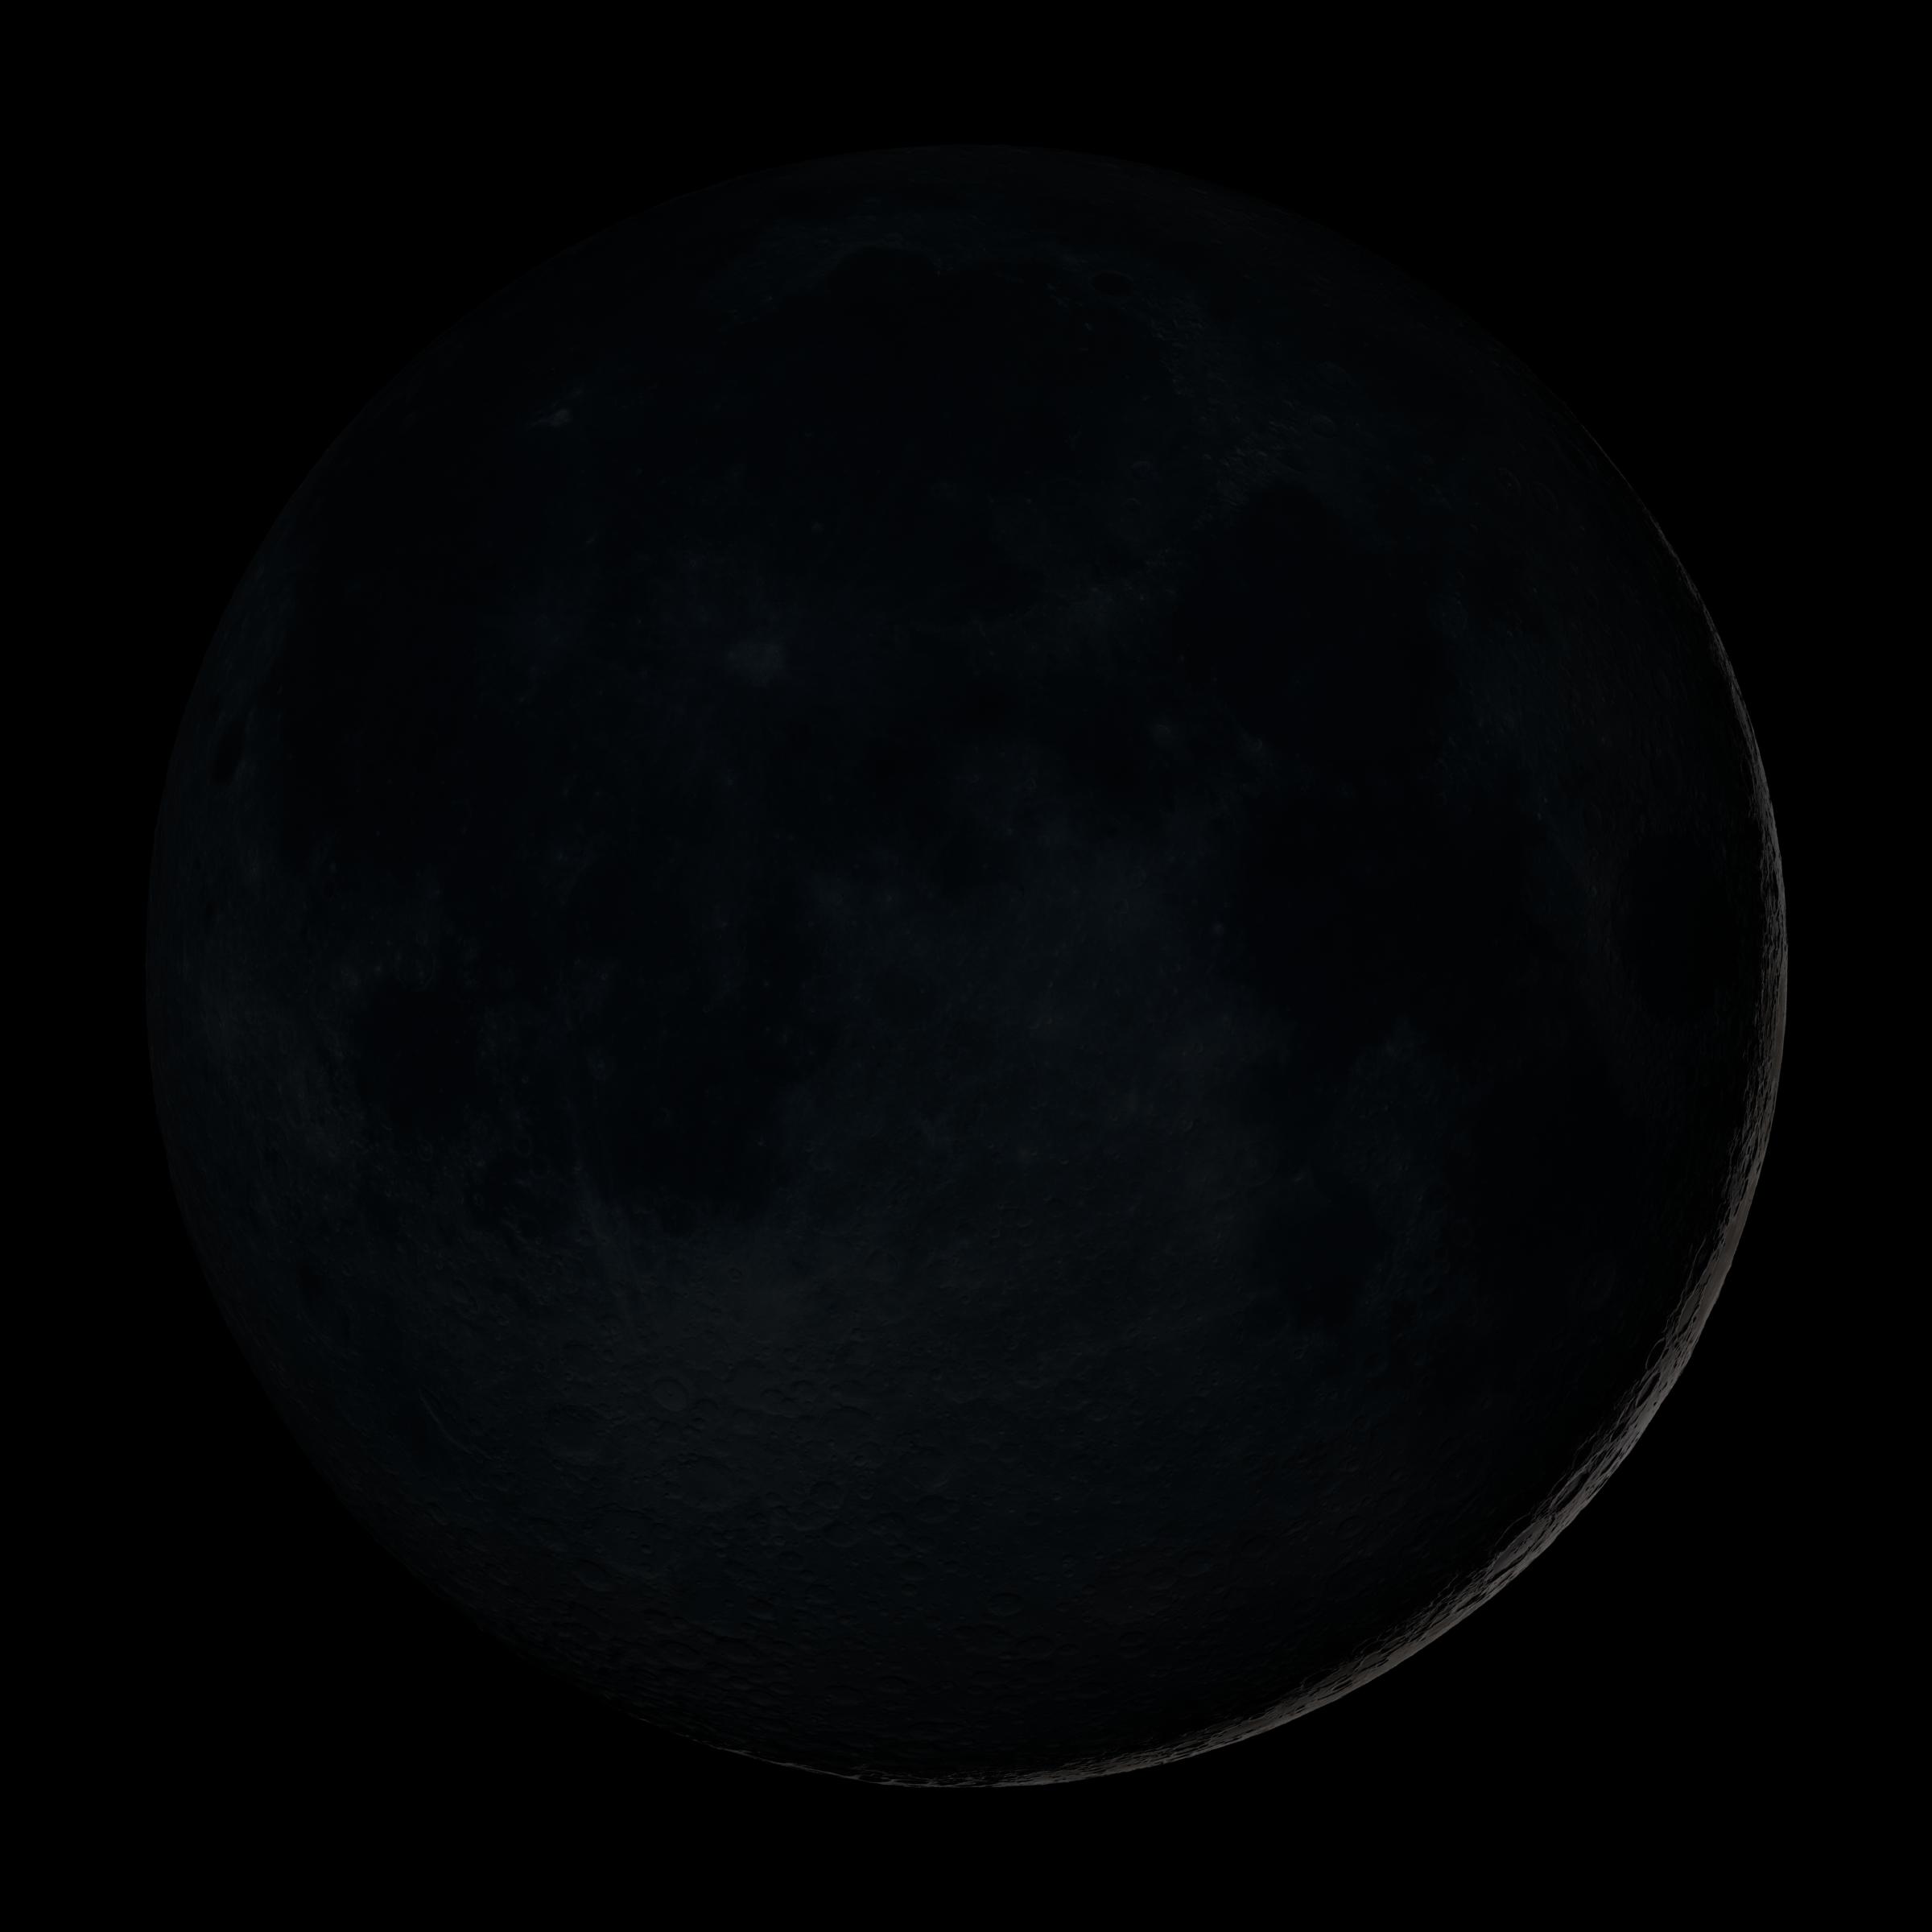 November 30, 2020 Gemini Full Moon Lunar Eclipse